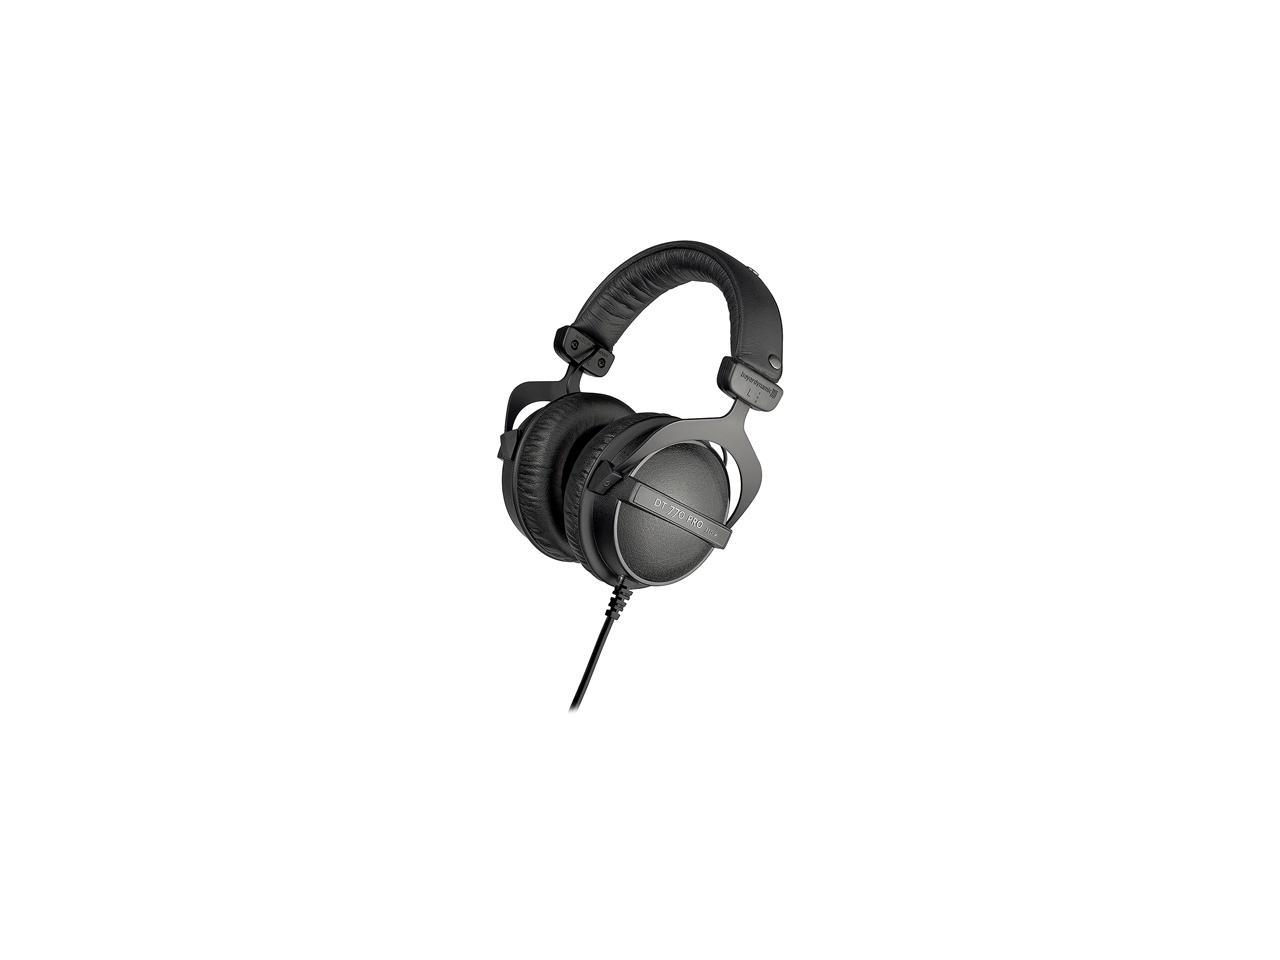 Beyerdynamic DT 770 Pro 32 Ohm Studio Headphones - Newegg.com